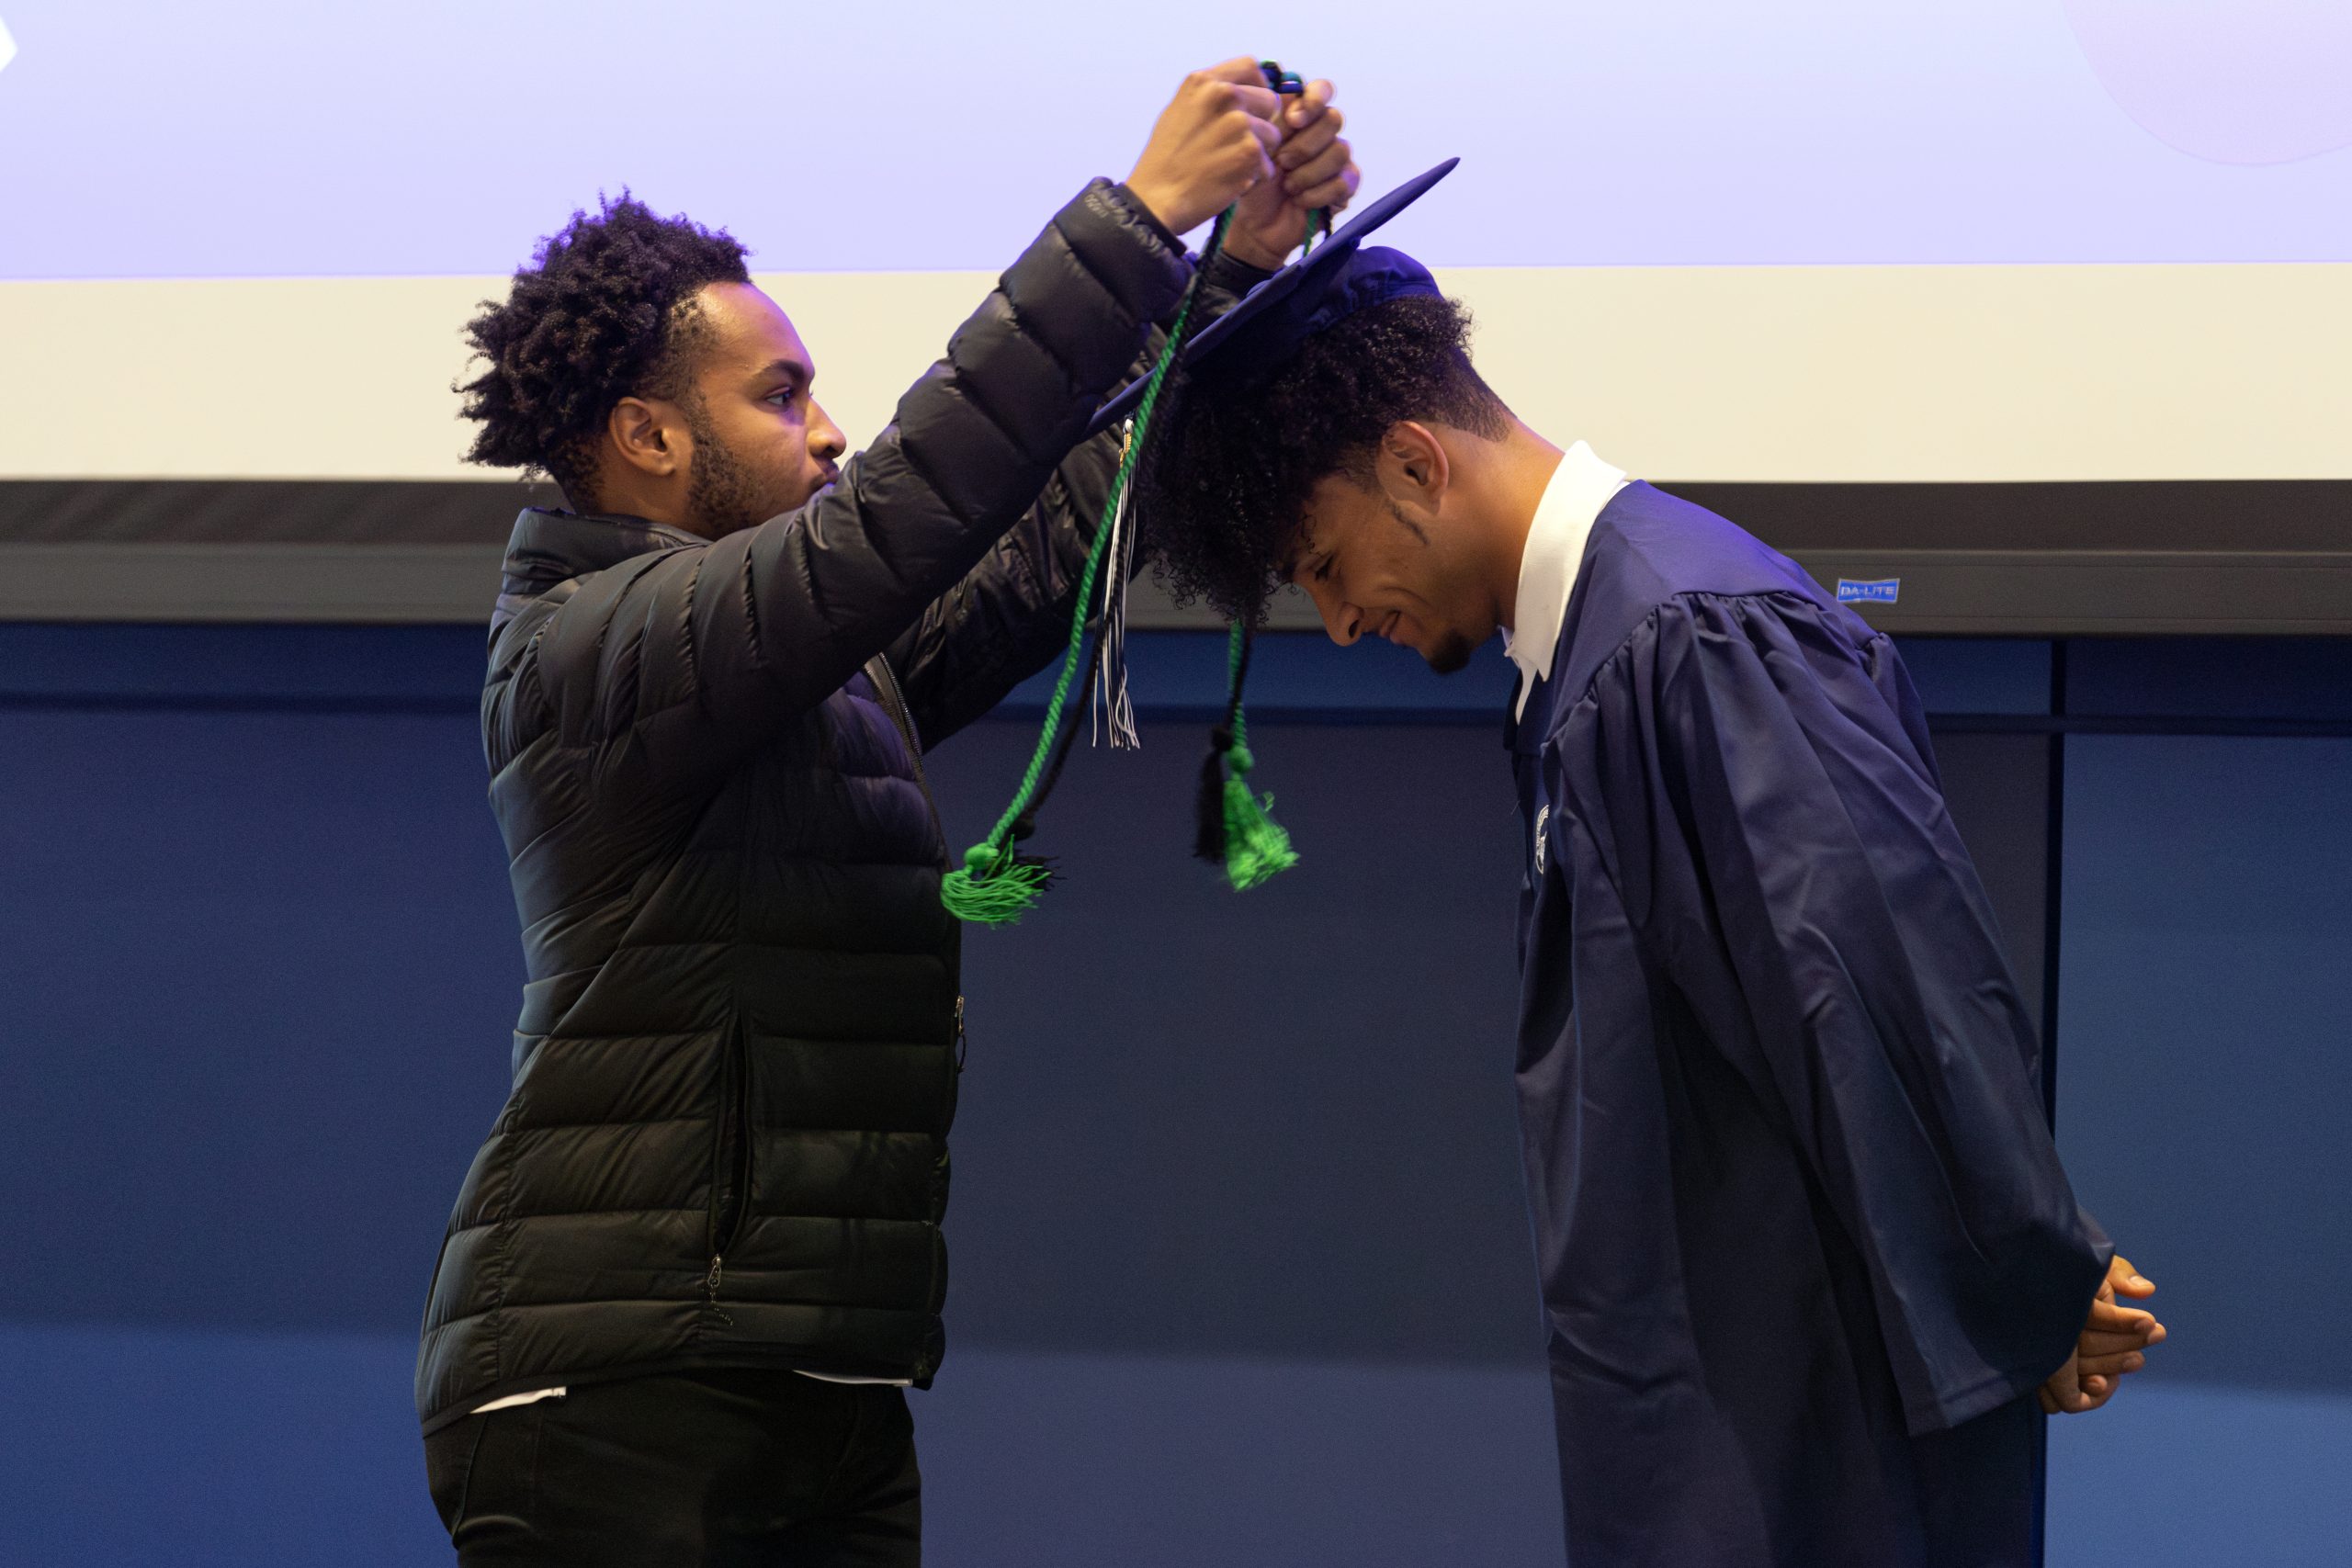 a first-generation graduate receiving a green chord